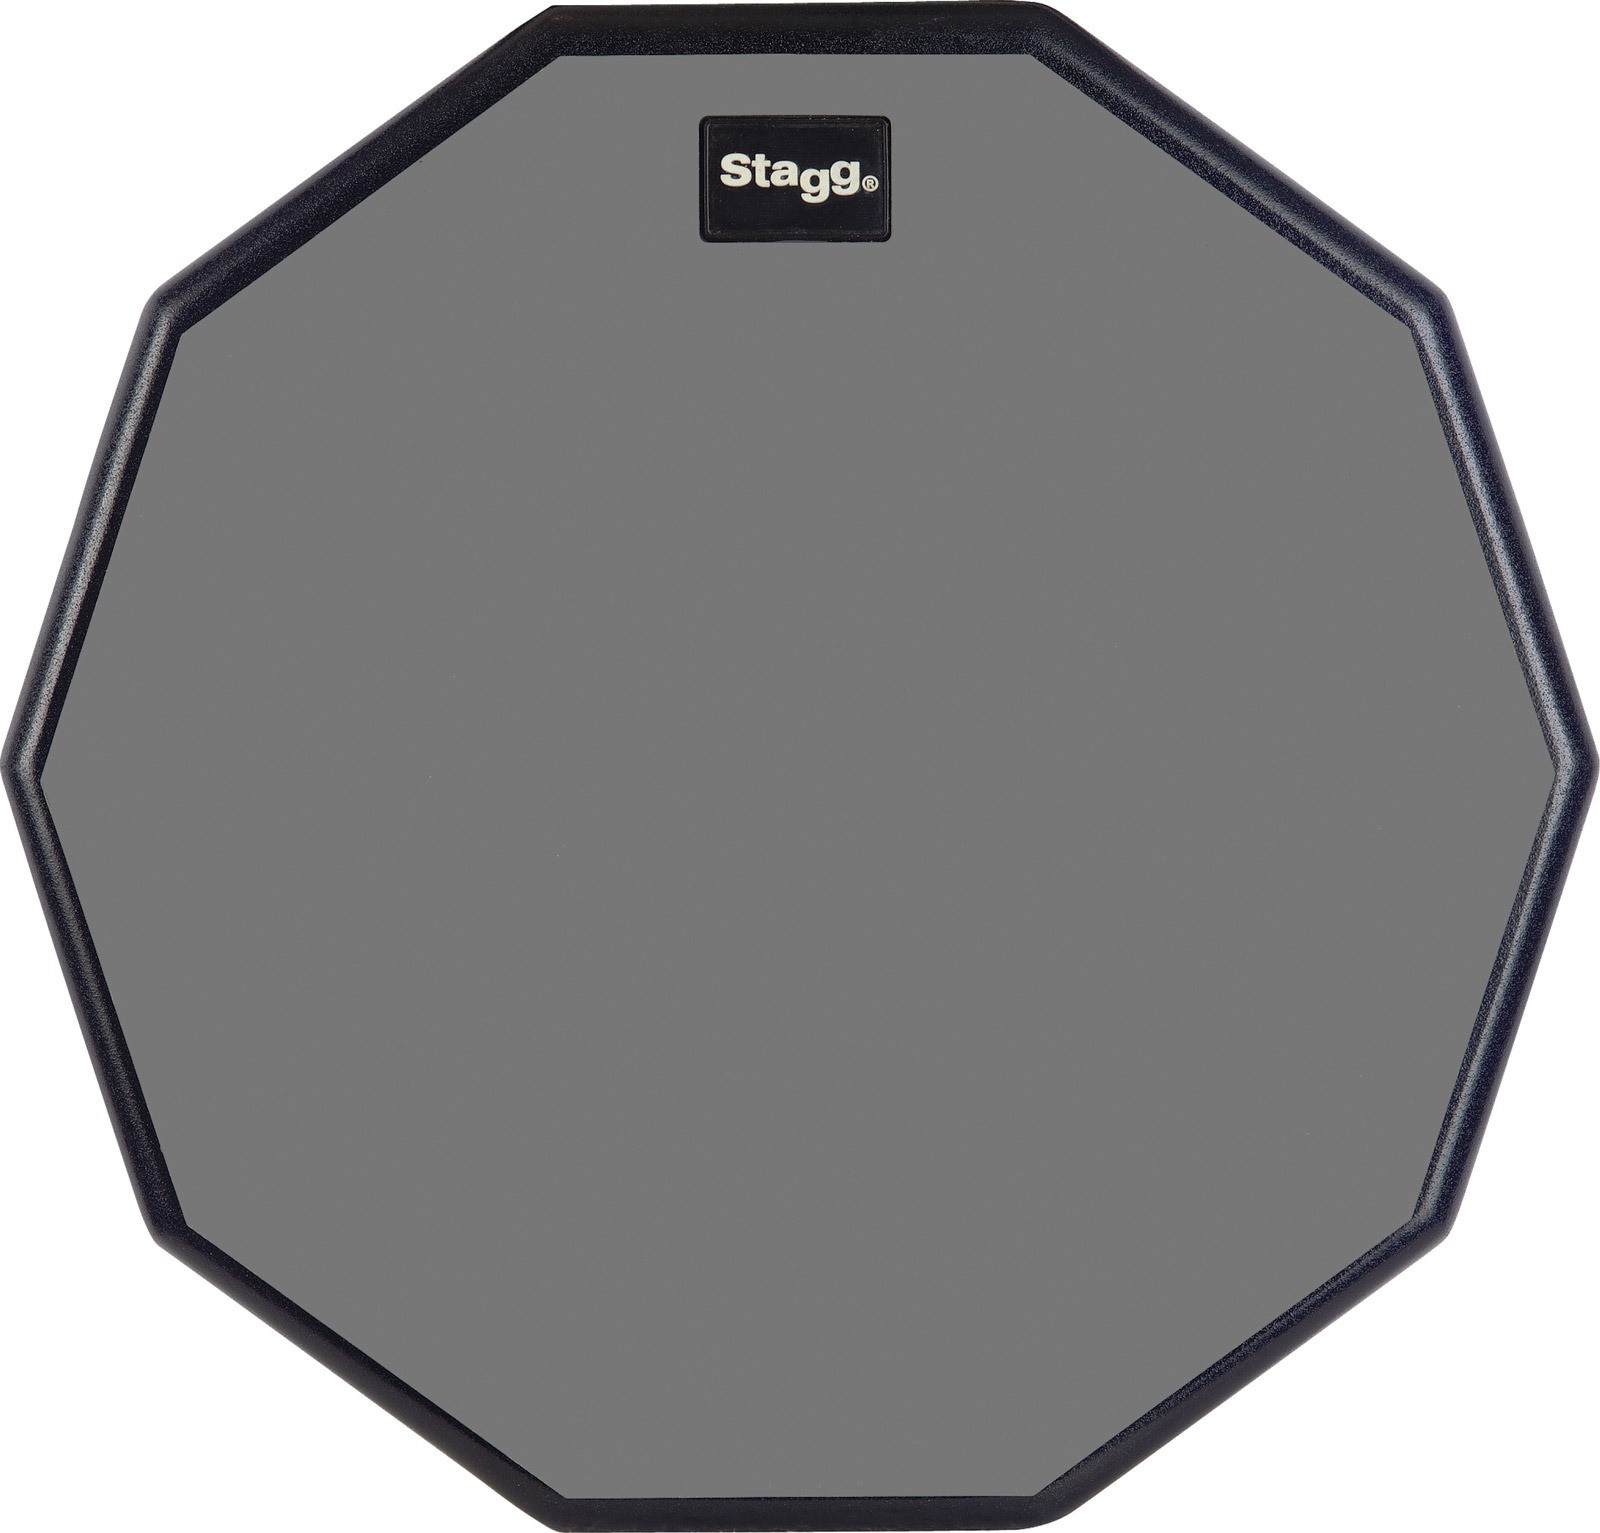 Stagg 12'' Desktop Practice Pad, Ten-Sided